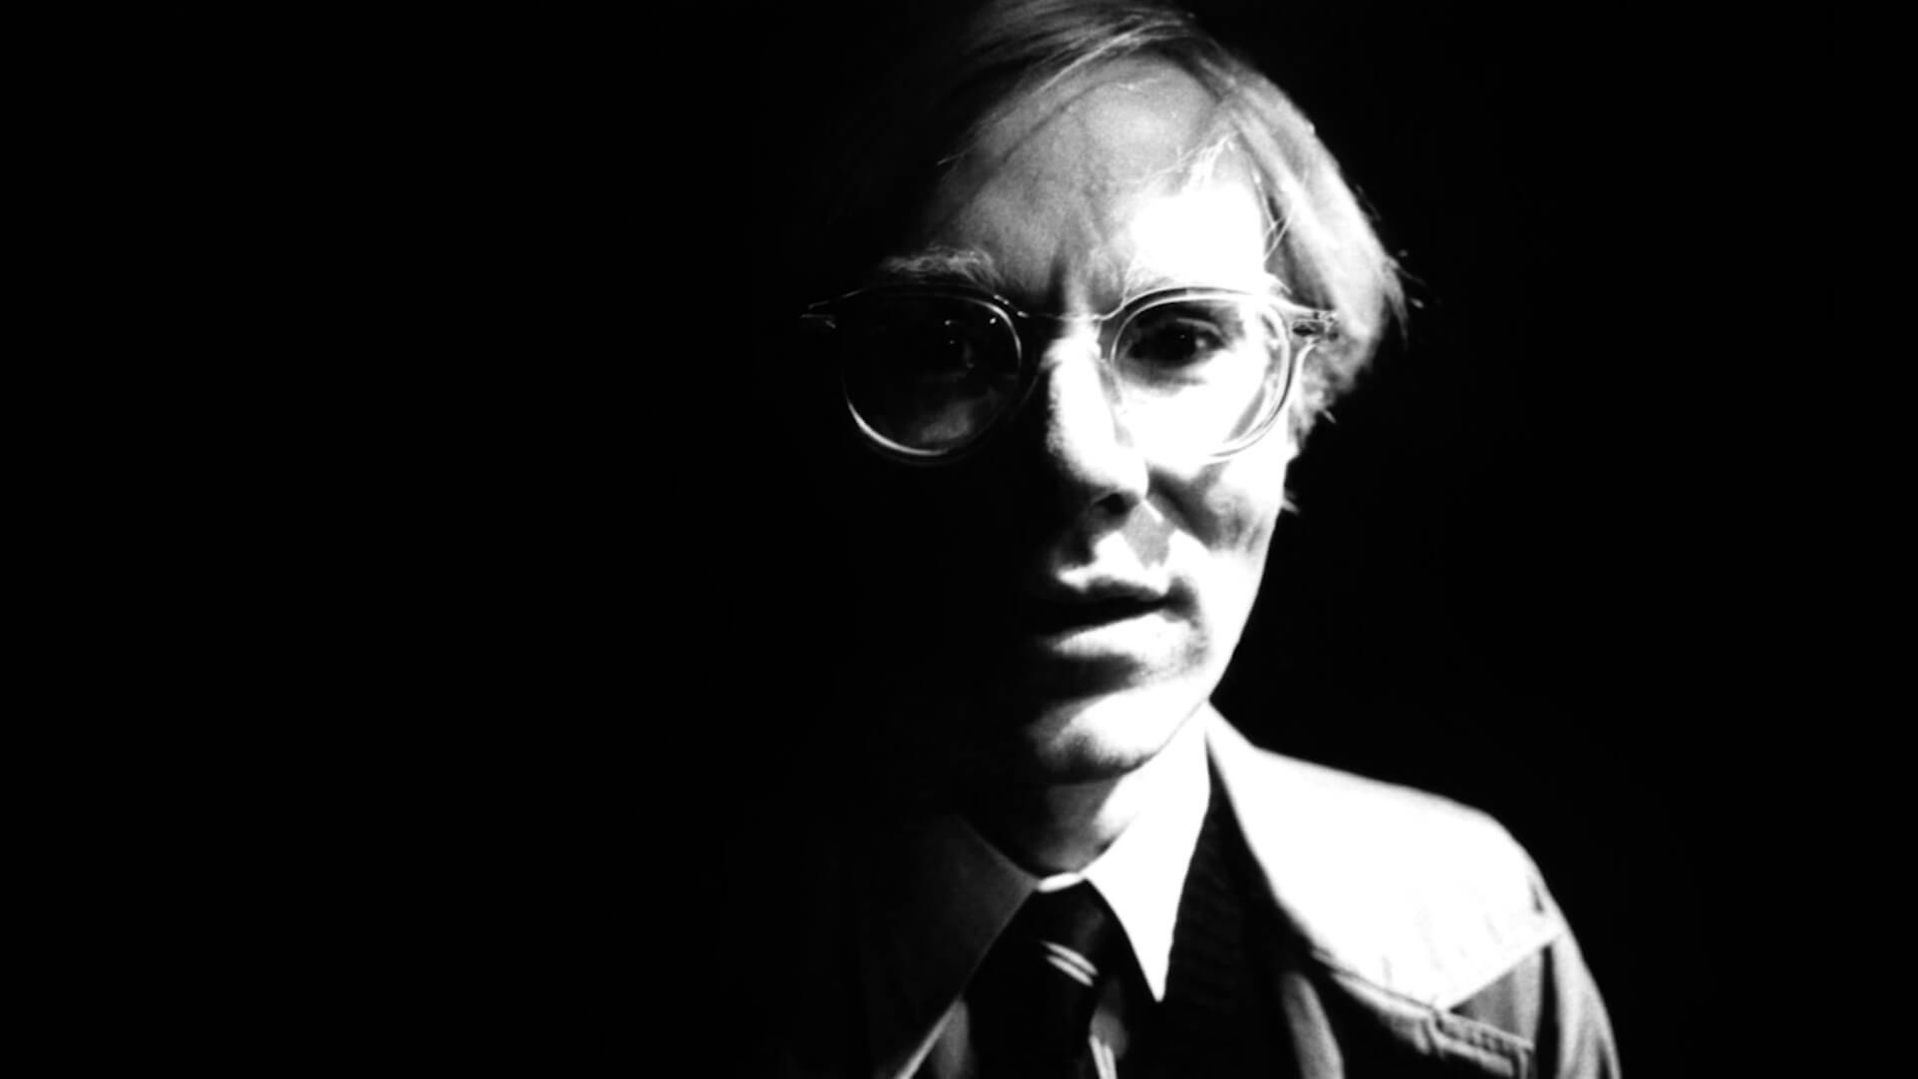 Photo of Andy Warhol by John Hustad